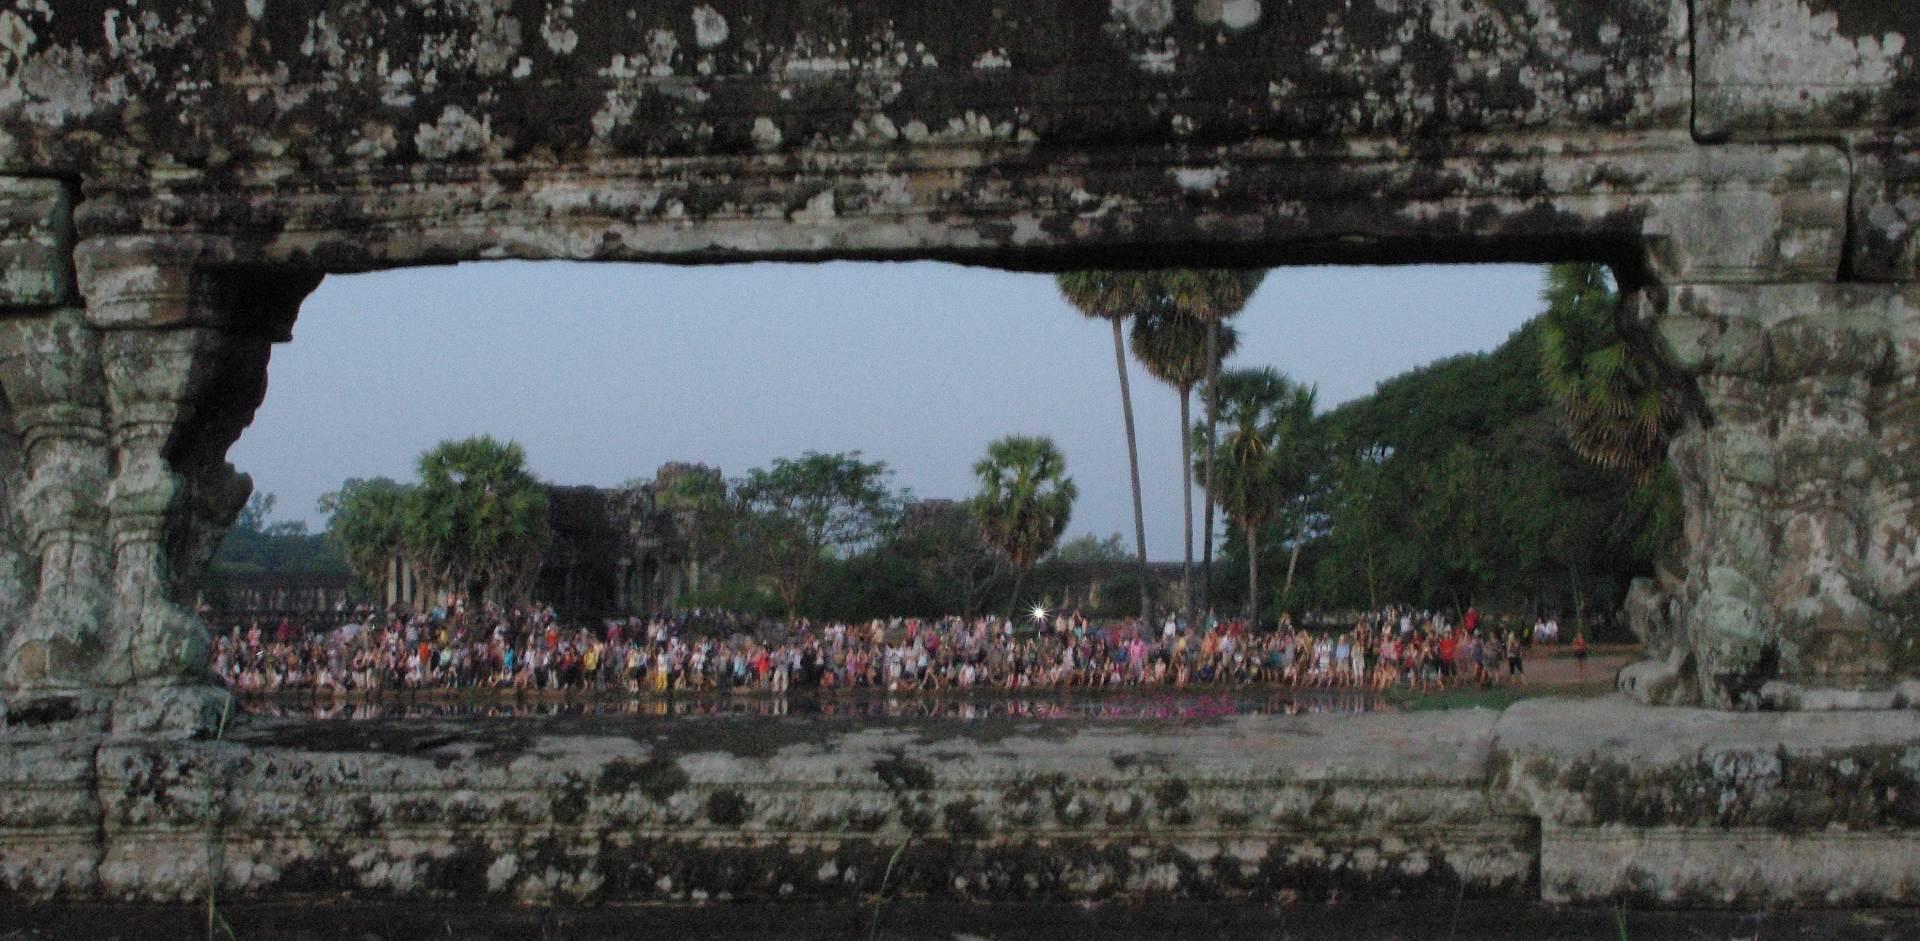 The crowds at the Reflection Pool, Angkor Wat